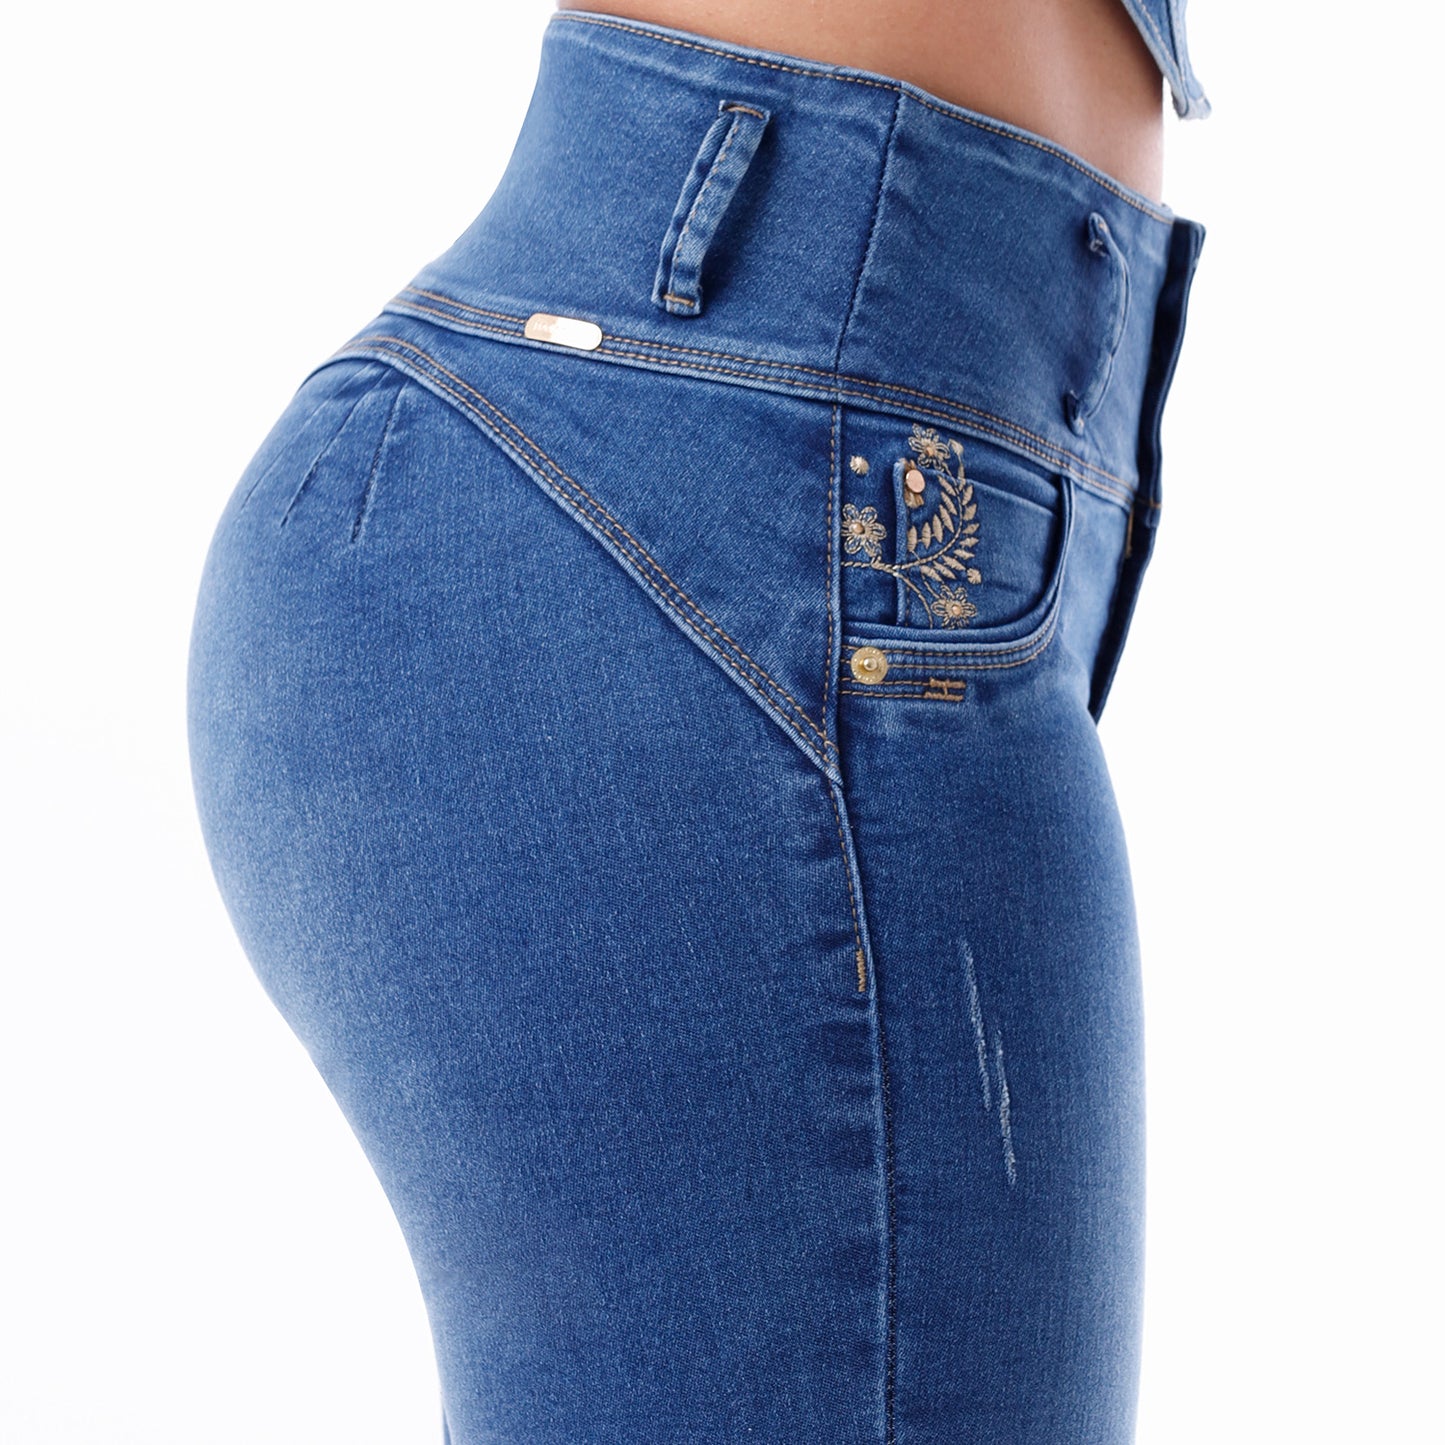 Jeans Push Up Mujer Semimoda Pitillo Semi Cintura Cristal – 220278